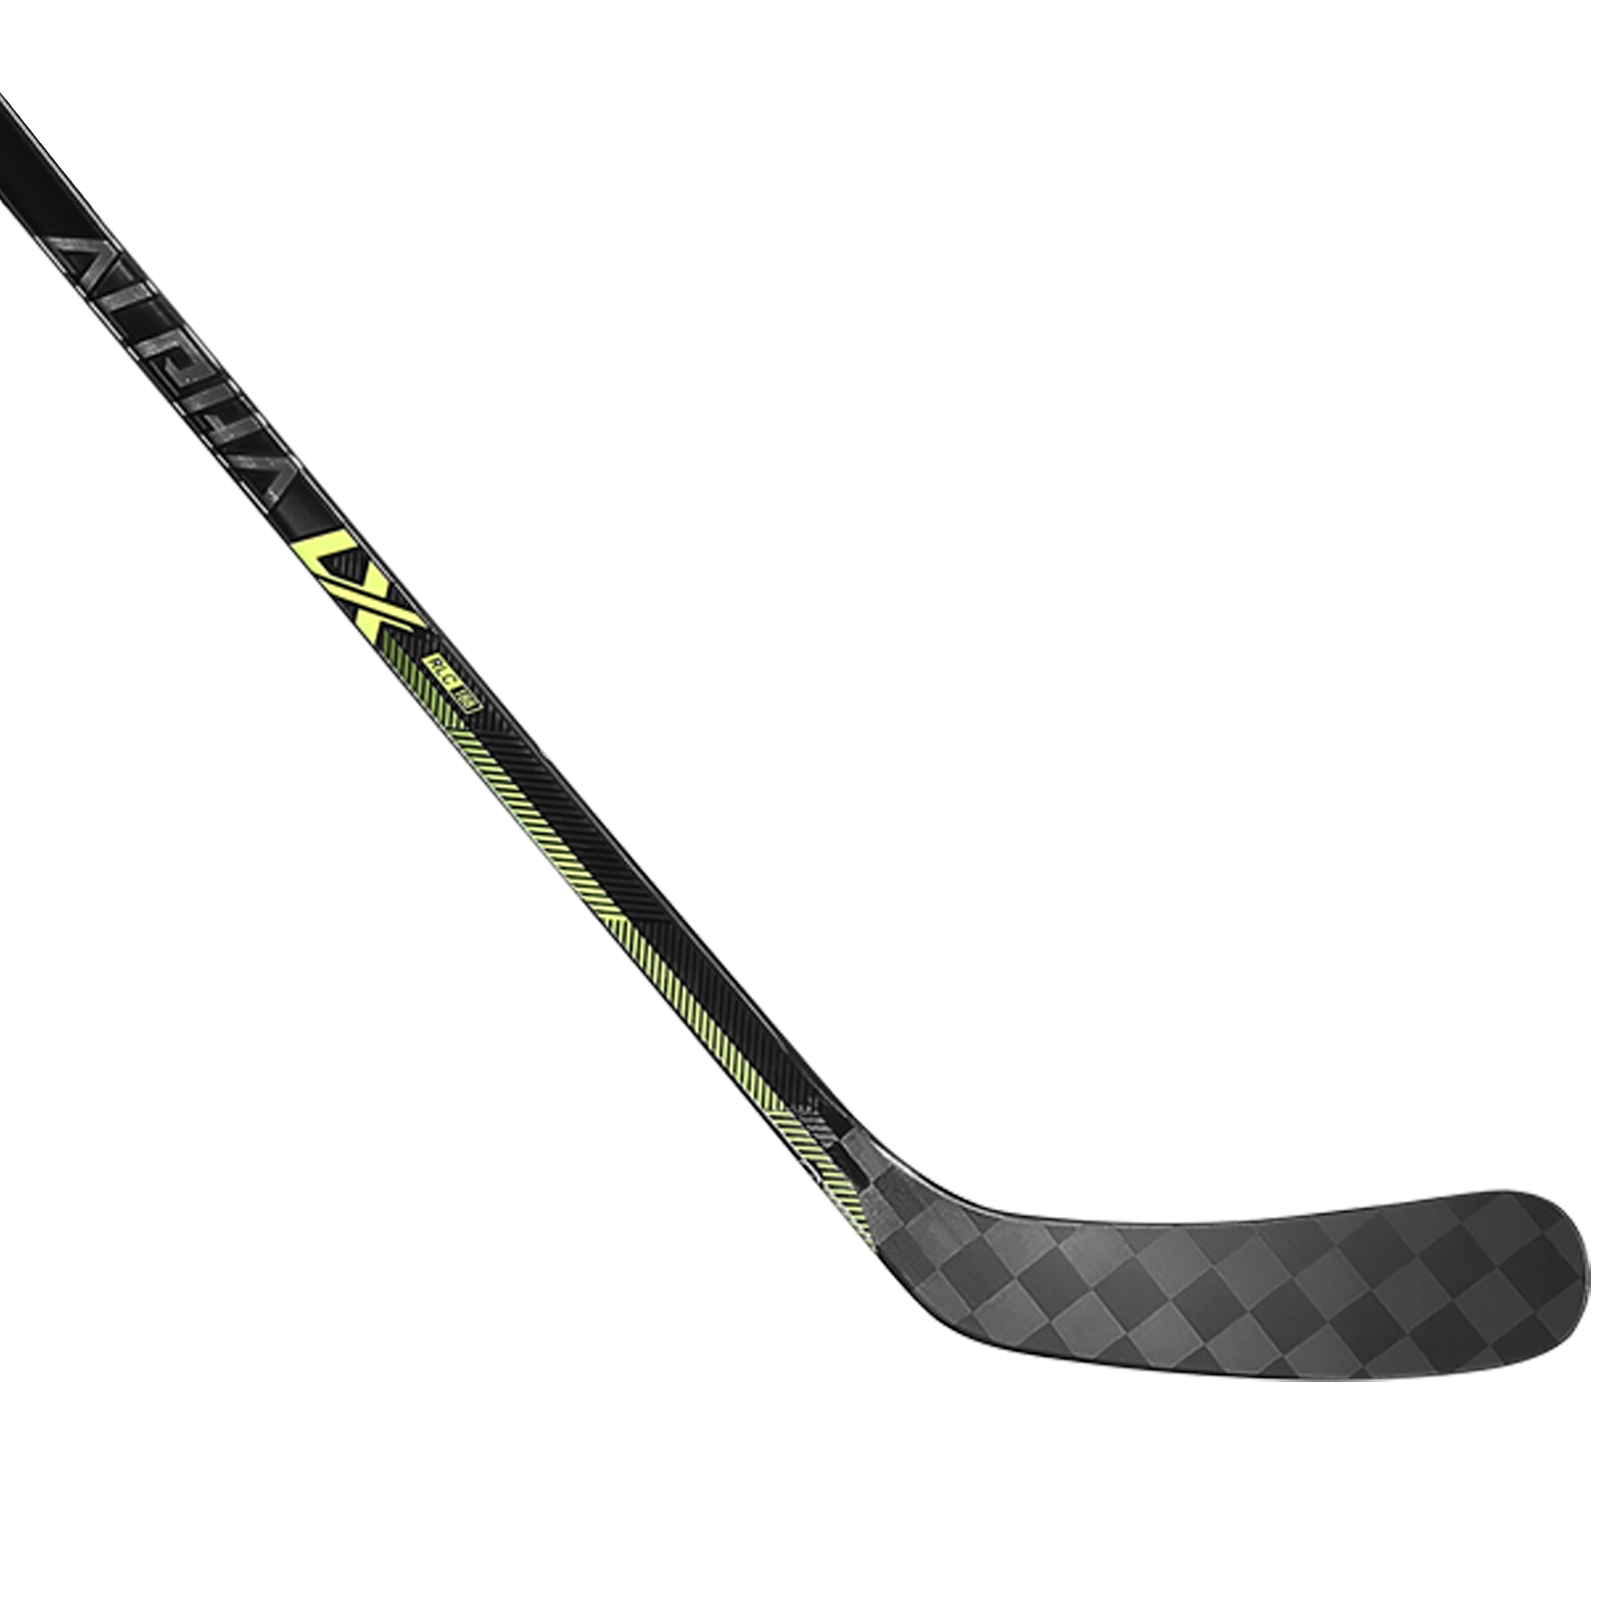 Warrior Alpha LX Pro Bâton de Hockey Senior